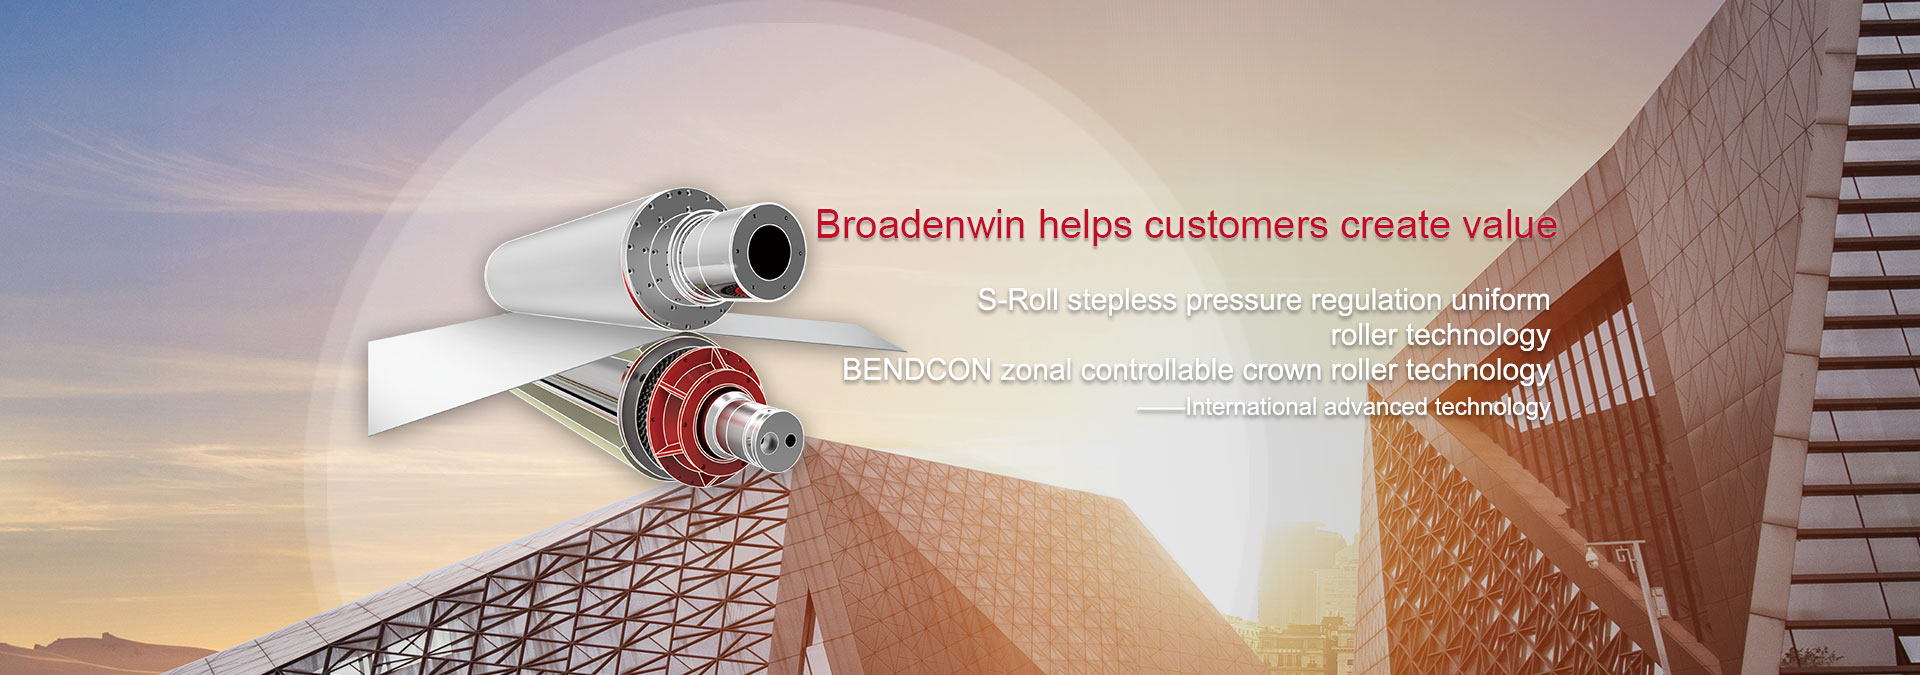 Broadenwin helps customers create value